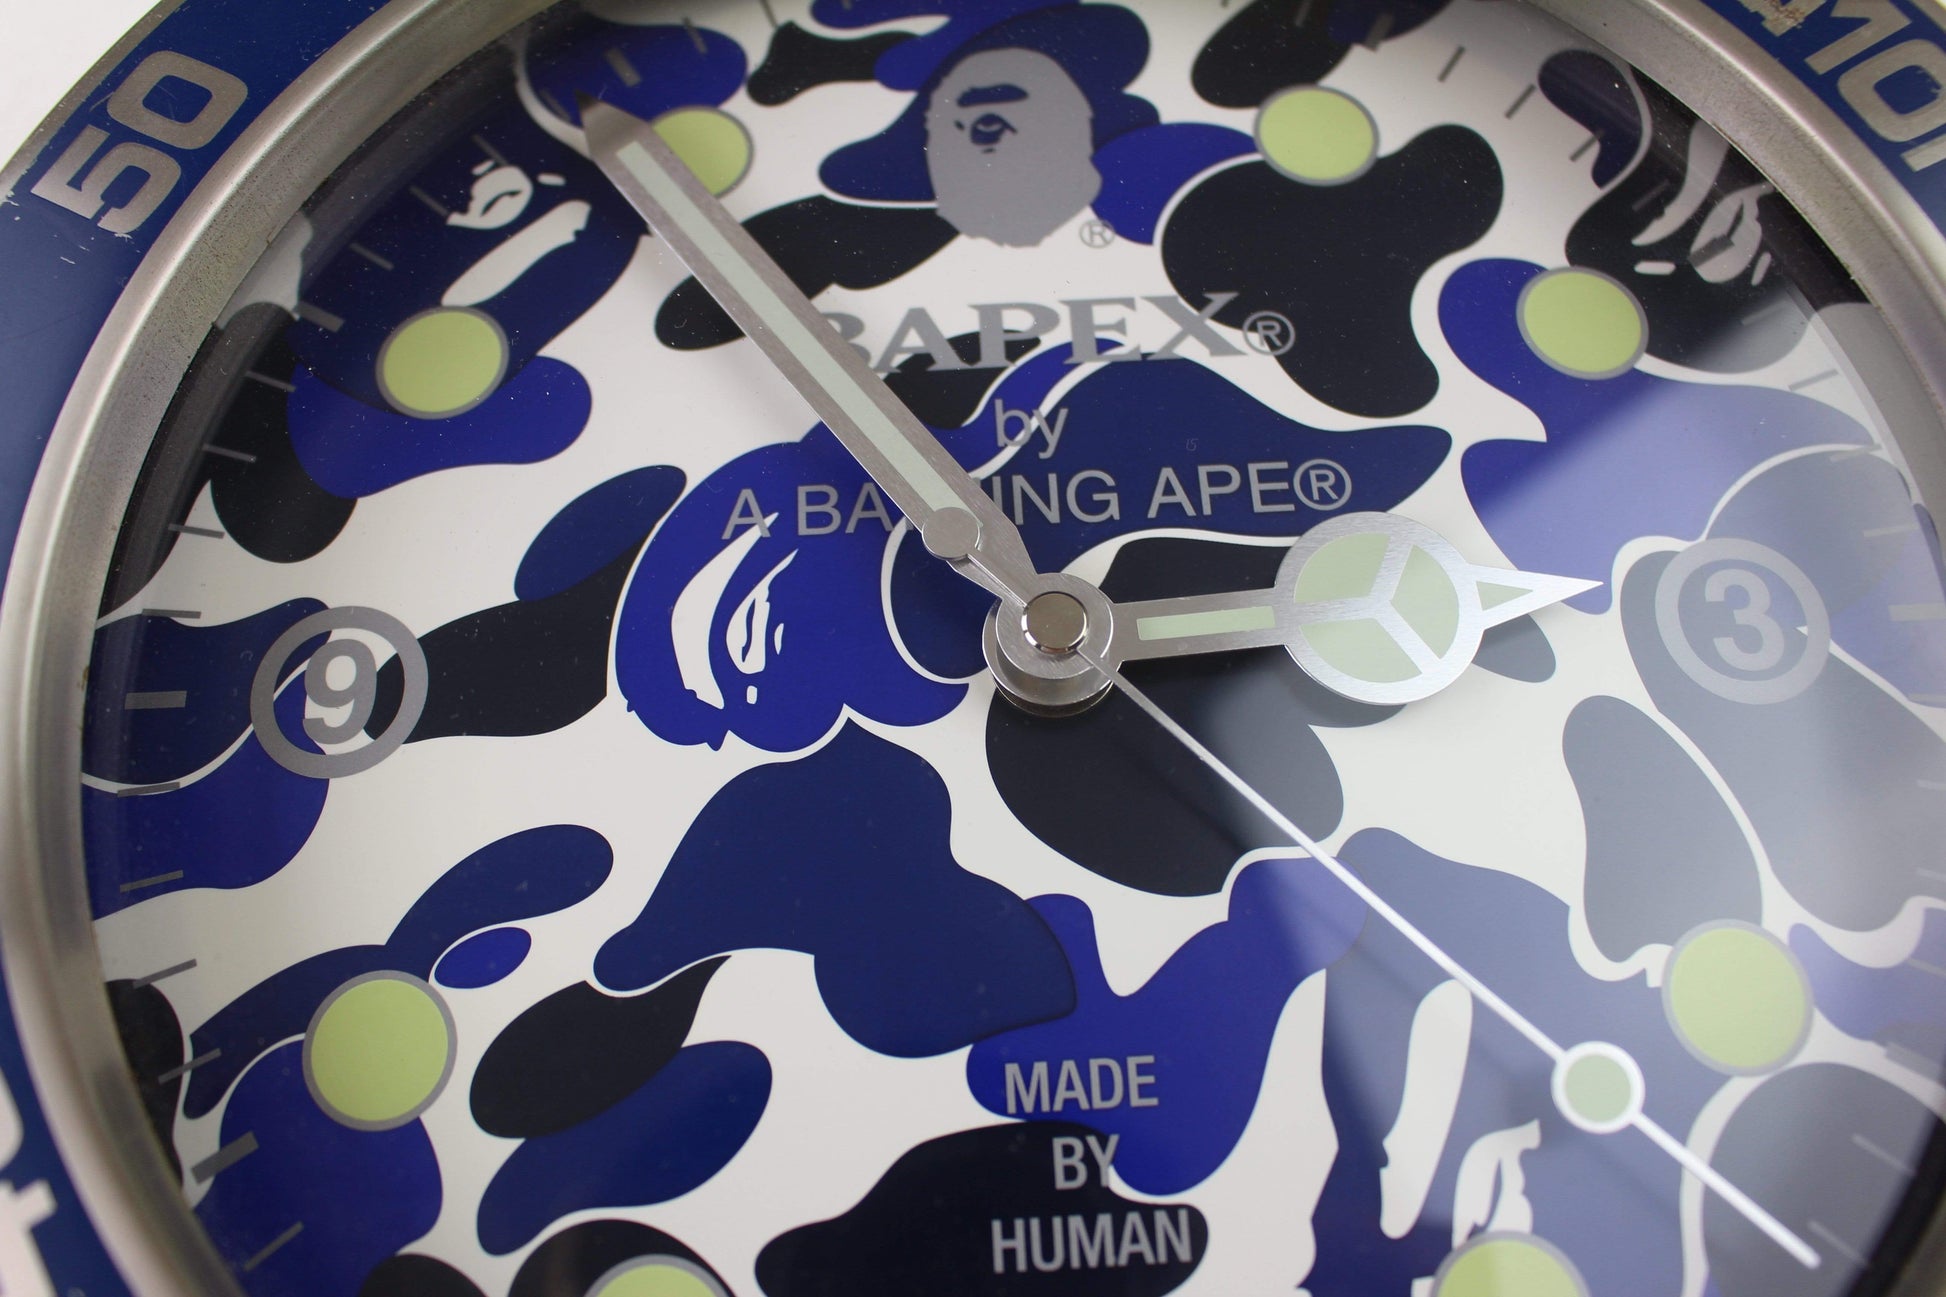 Bapex ABC Blue White Camo Clock - SaruGeneral